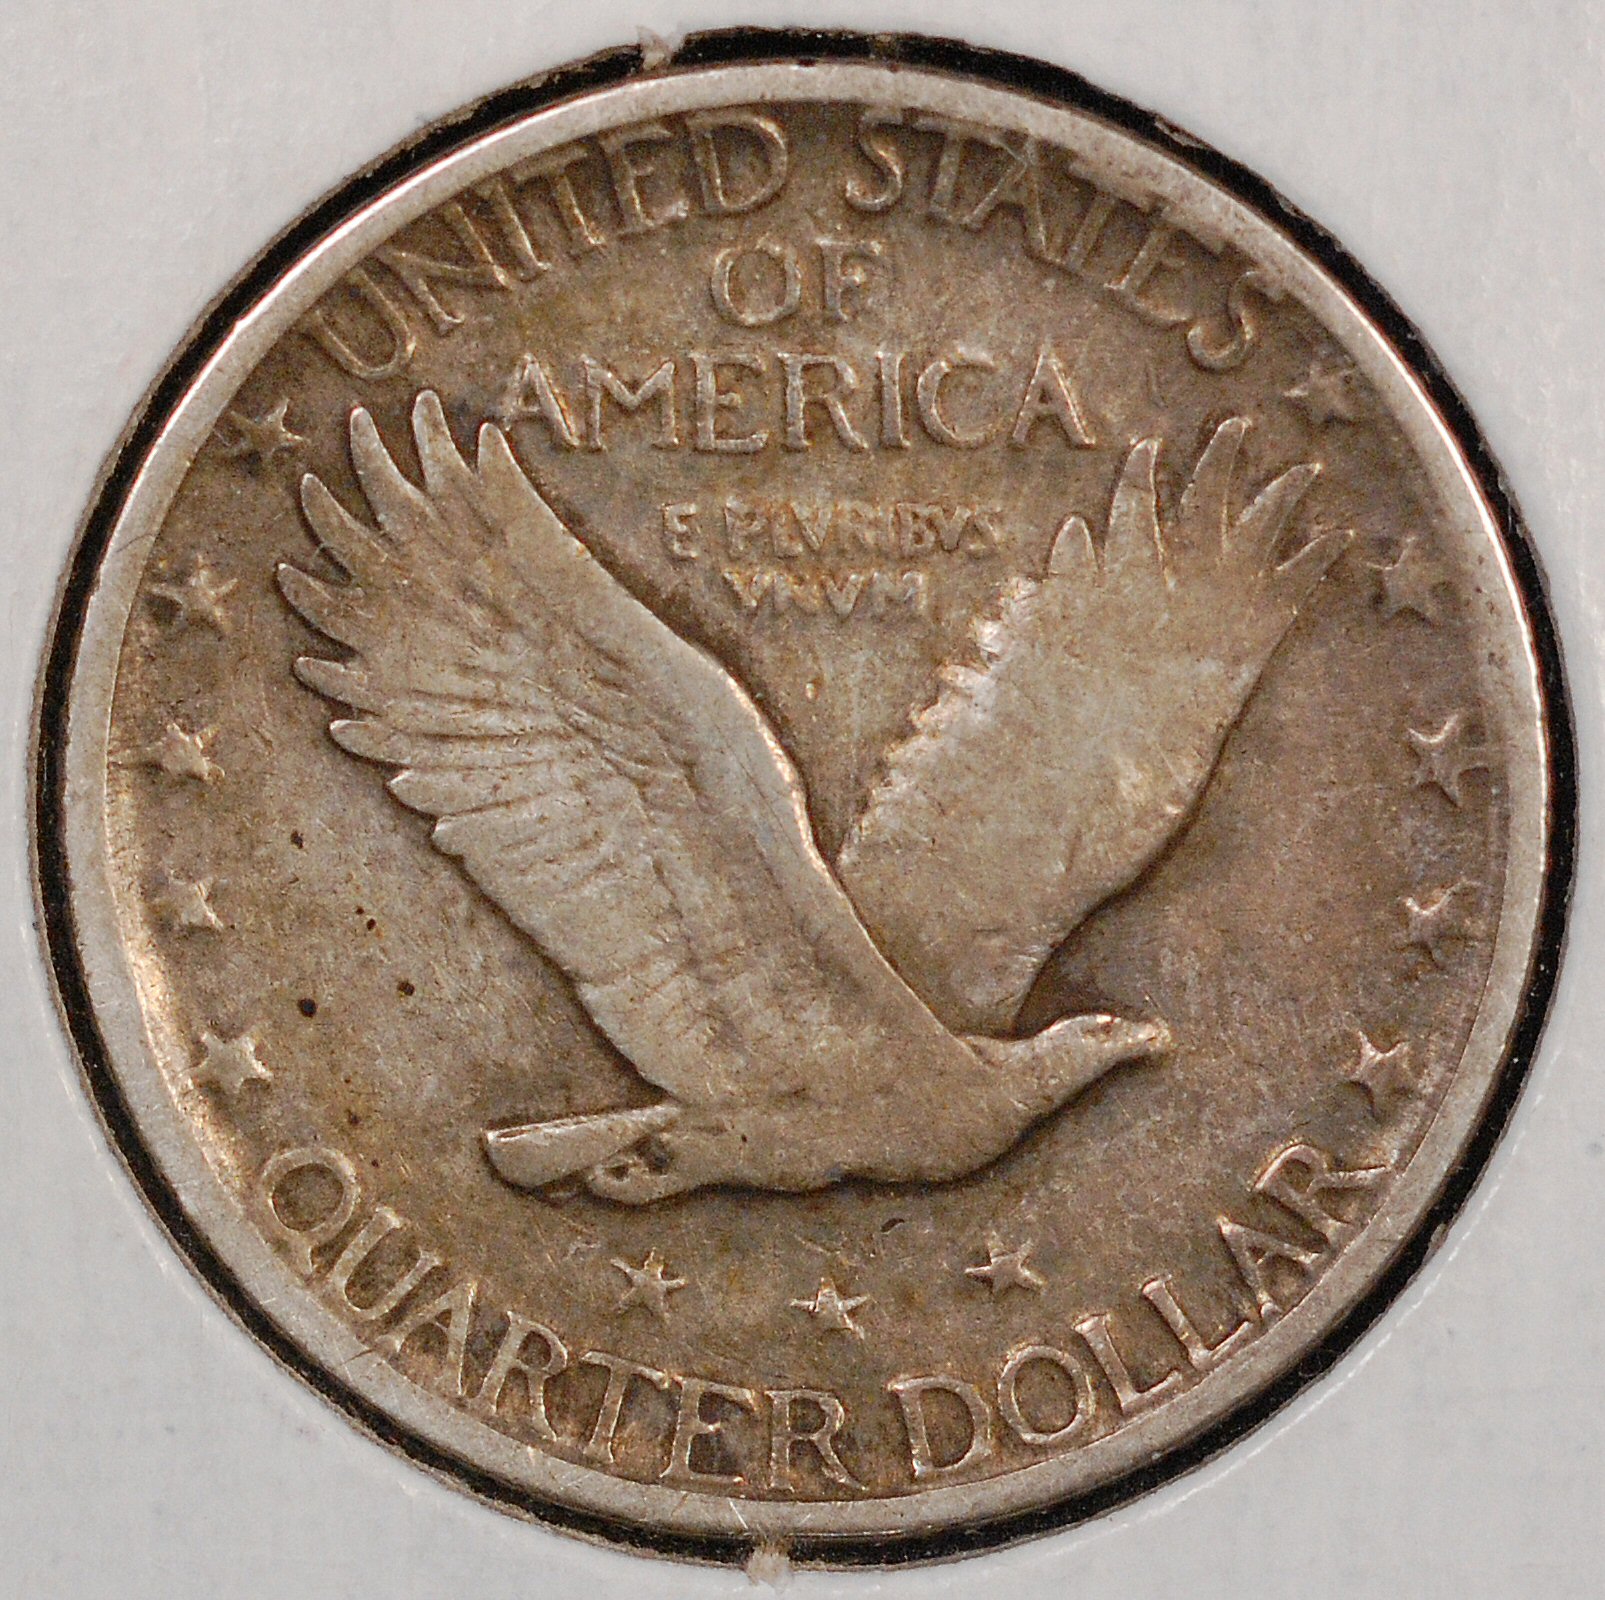 quarter standing liberty 1929-s rev.jpg